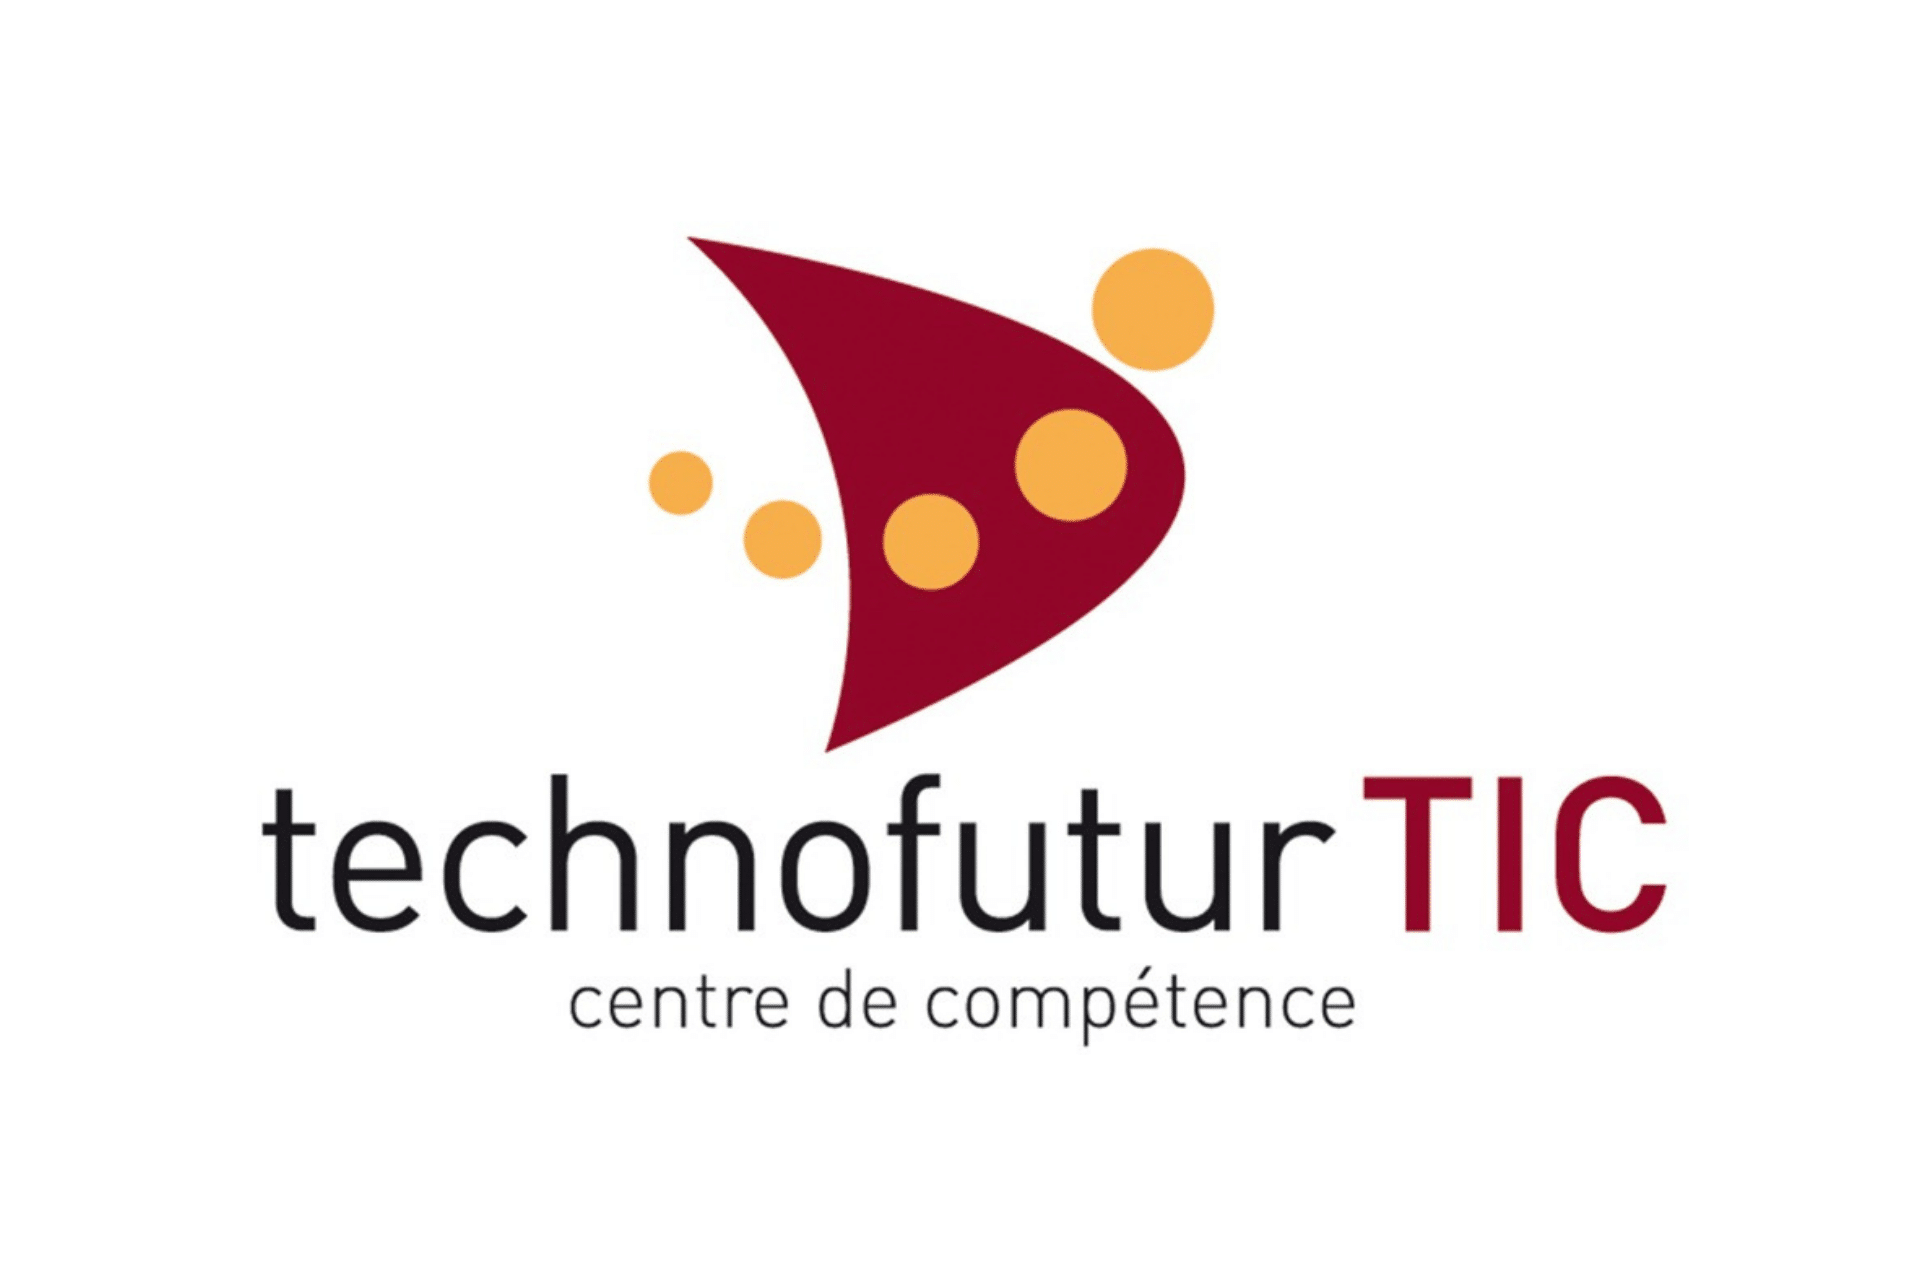 Technofutur TIC